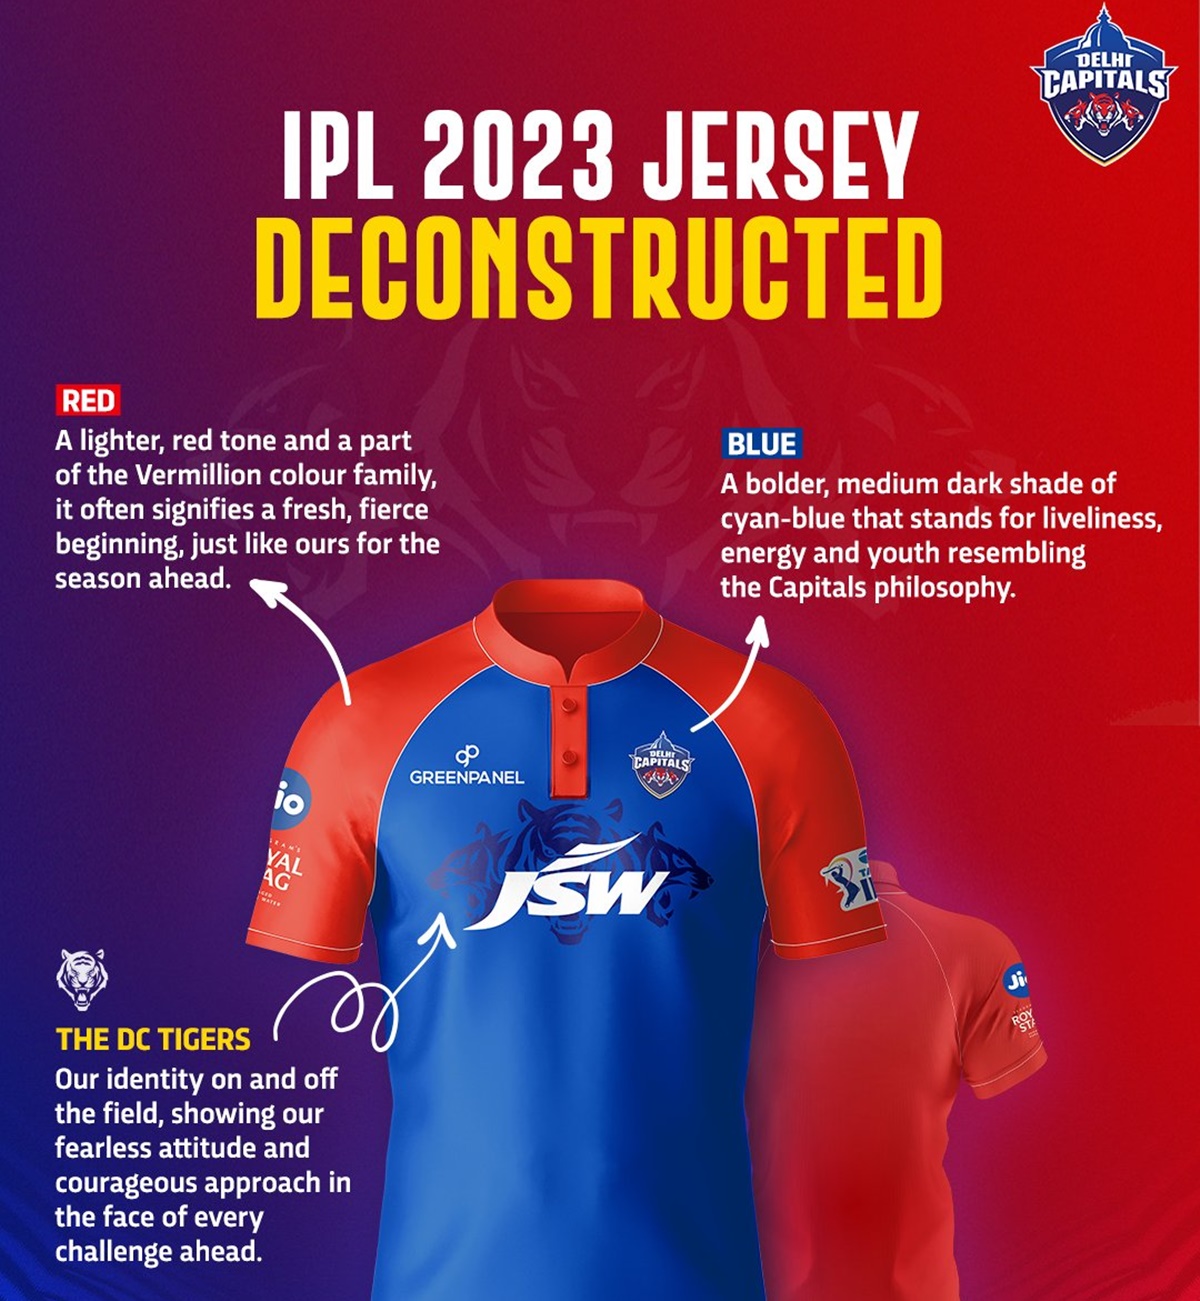 IPL 2021: Delhi Capitals launch jersey for upcoming season